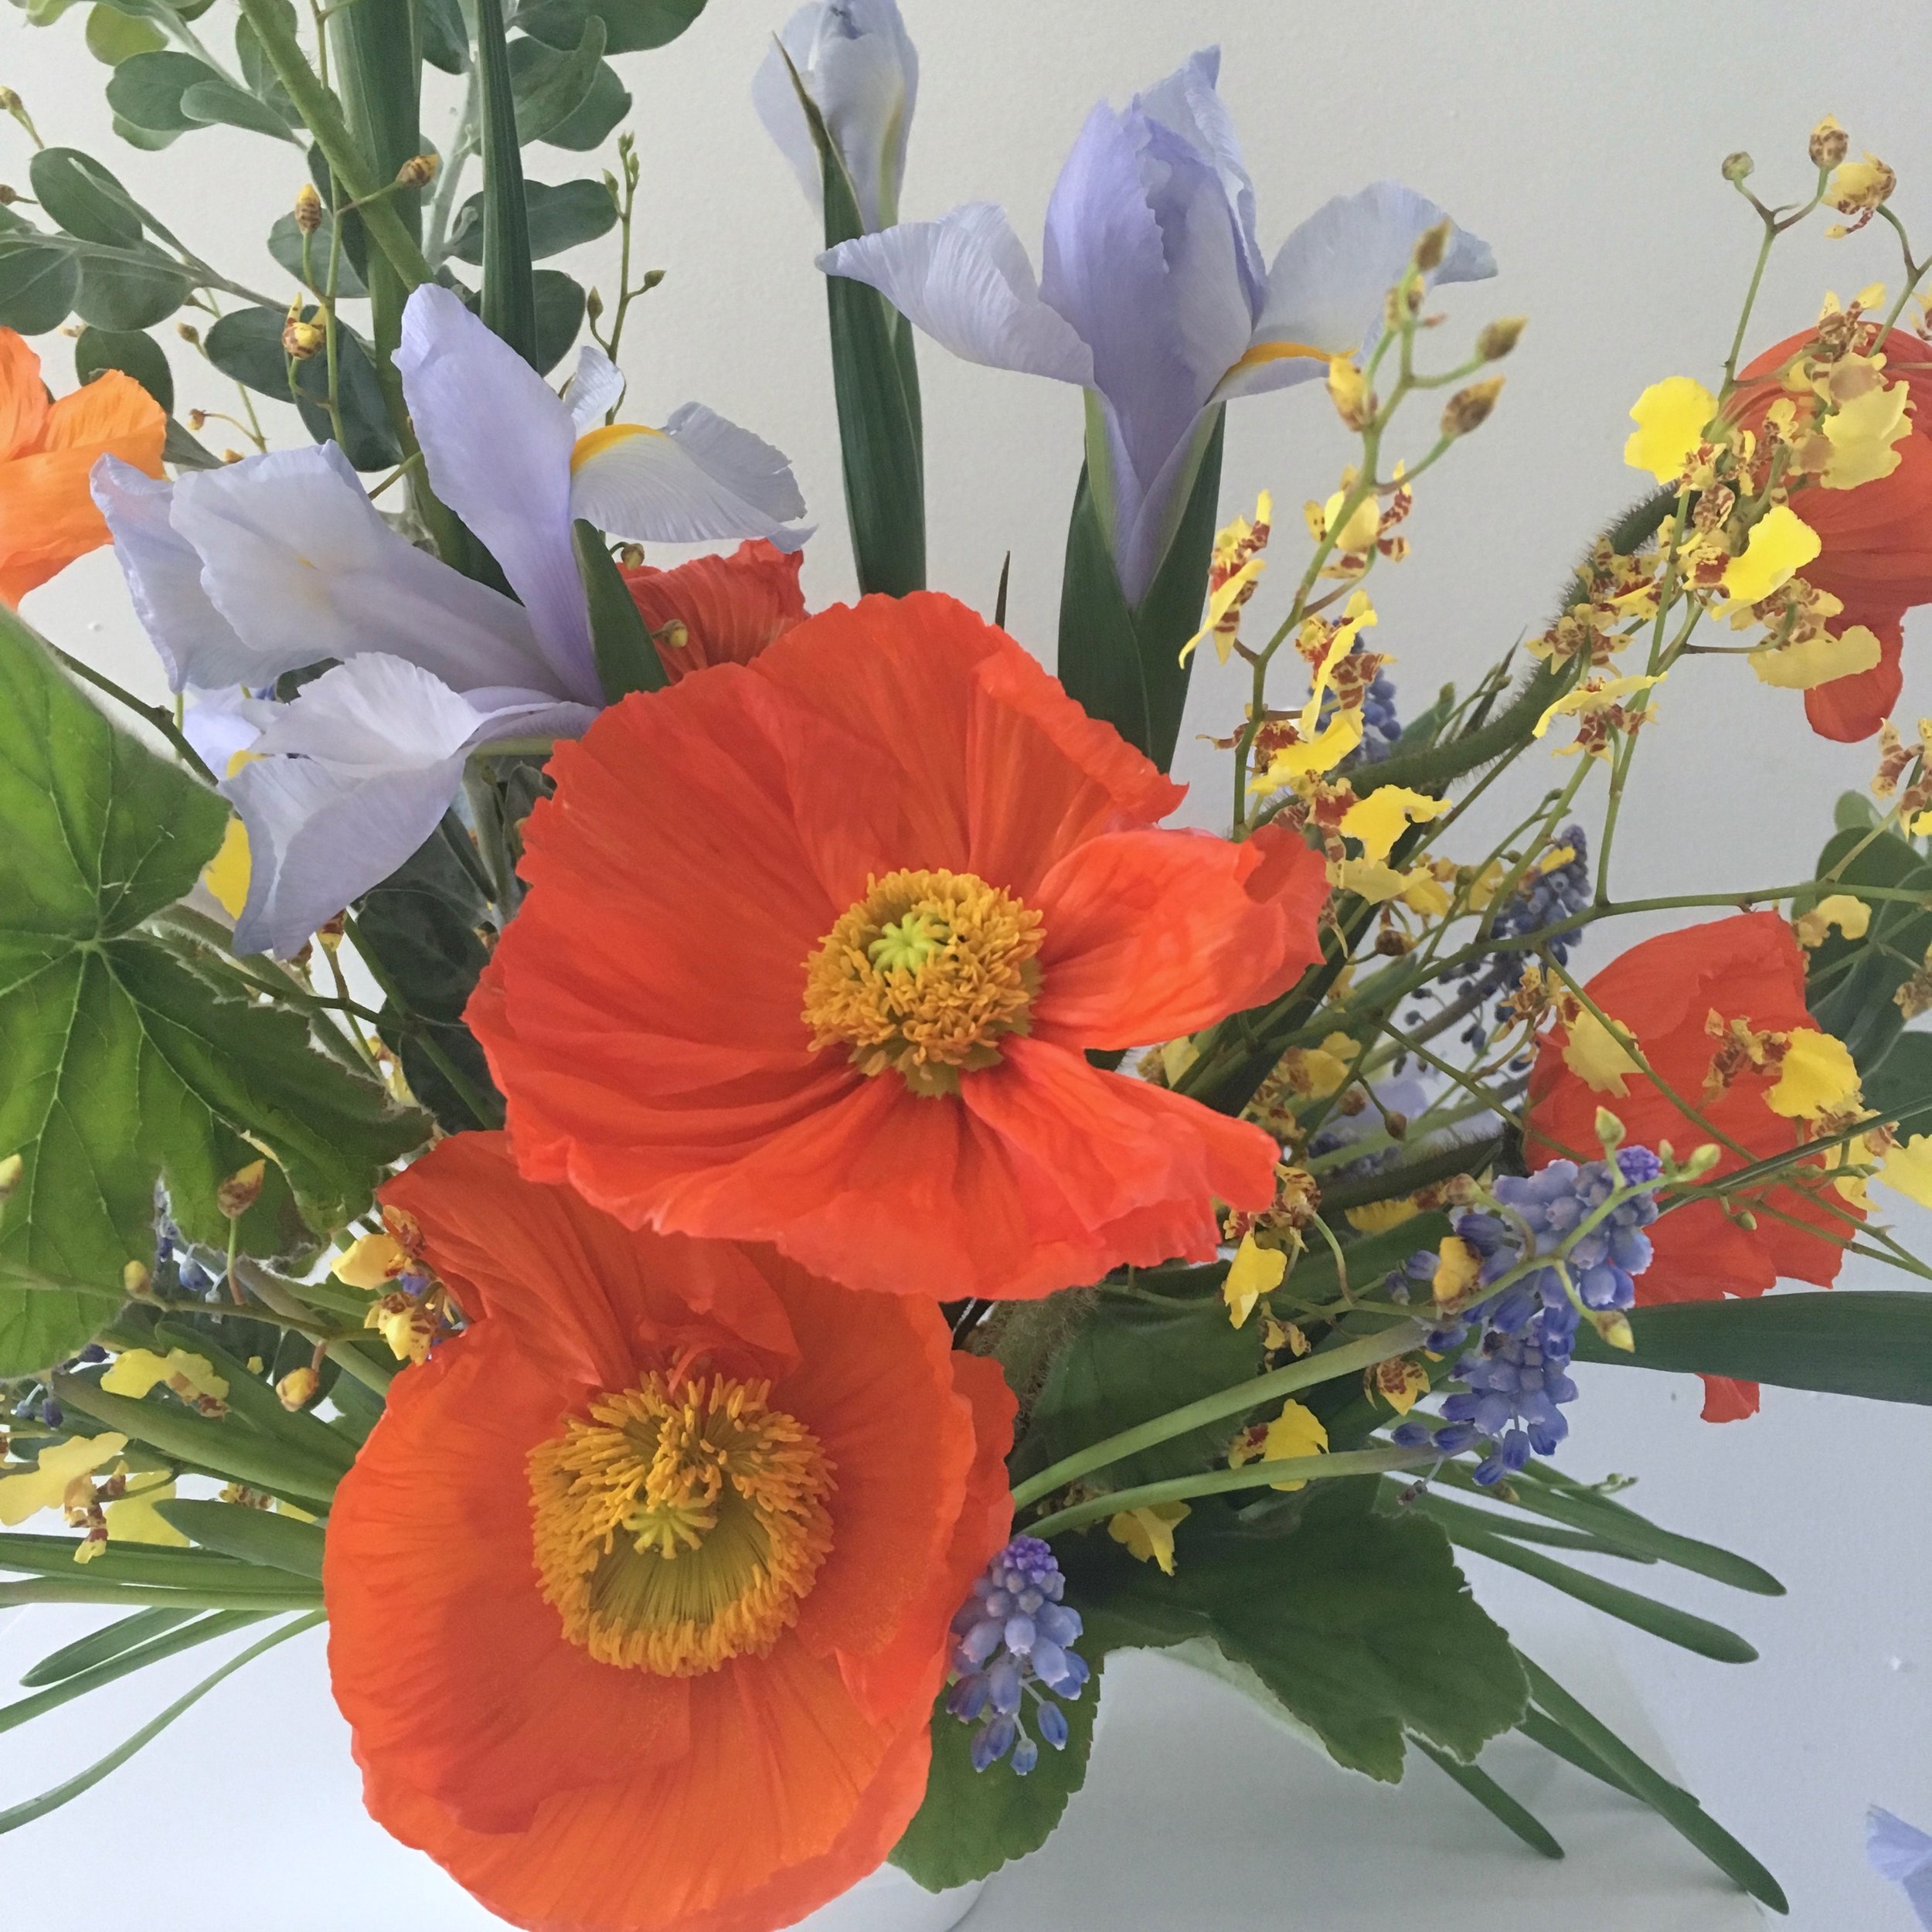 Fast Flower Video: Using the Iris Flower for Arranging